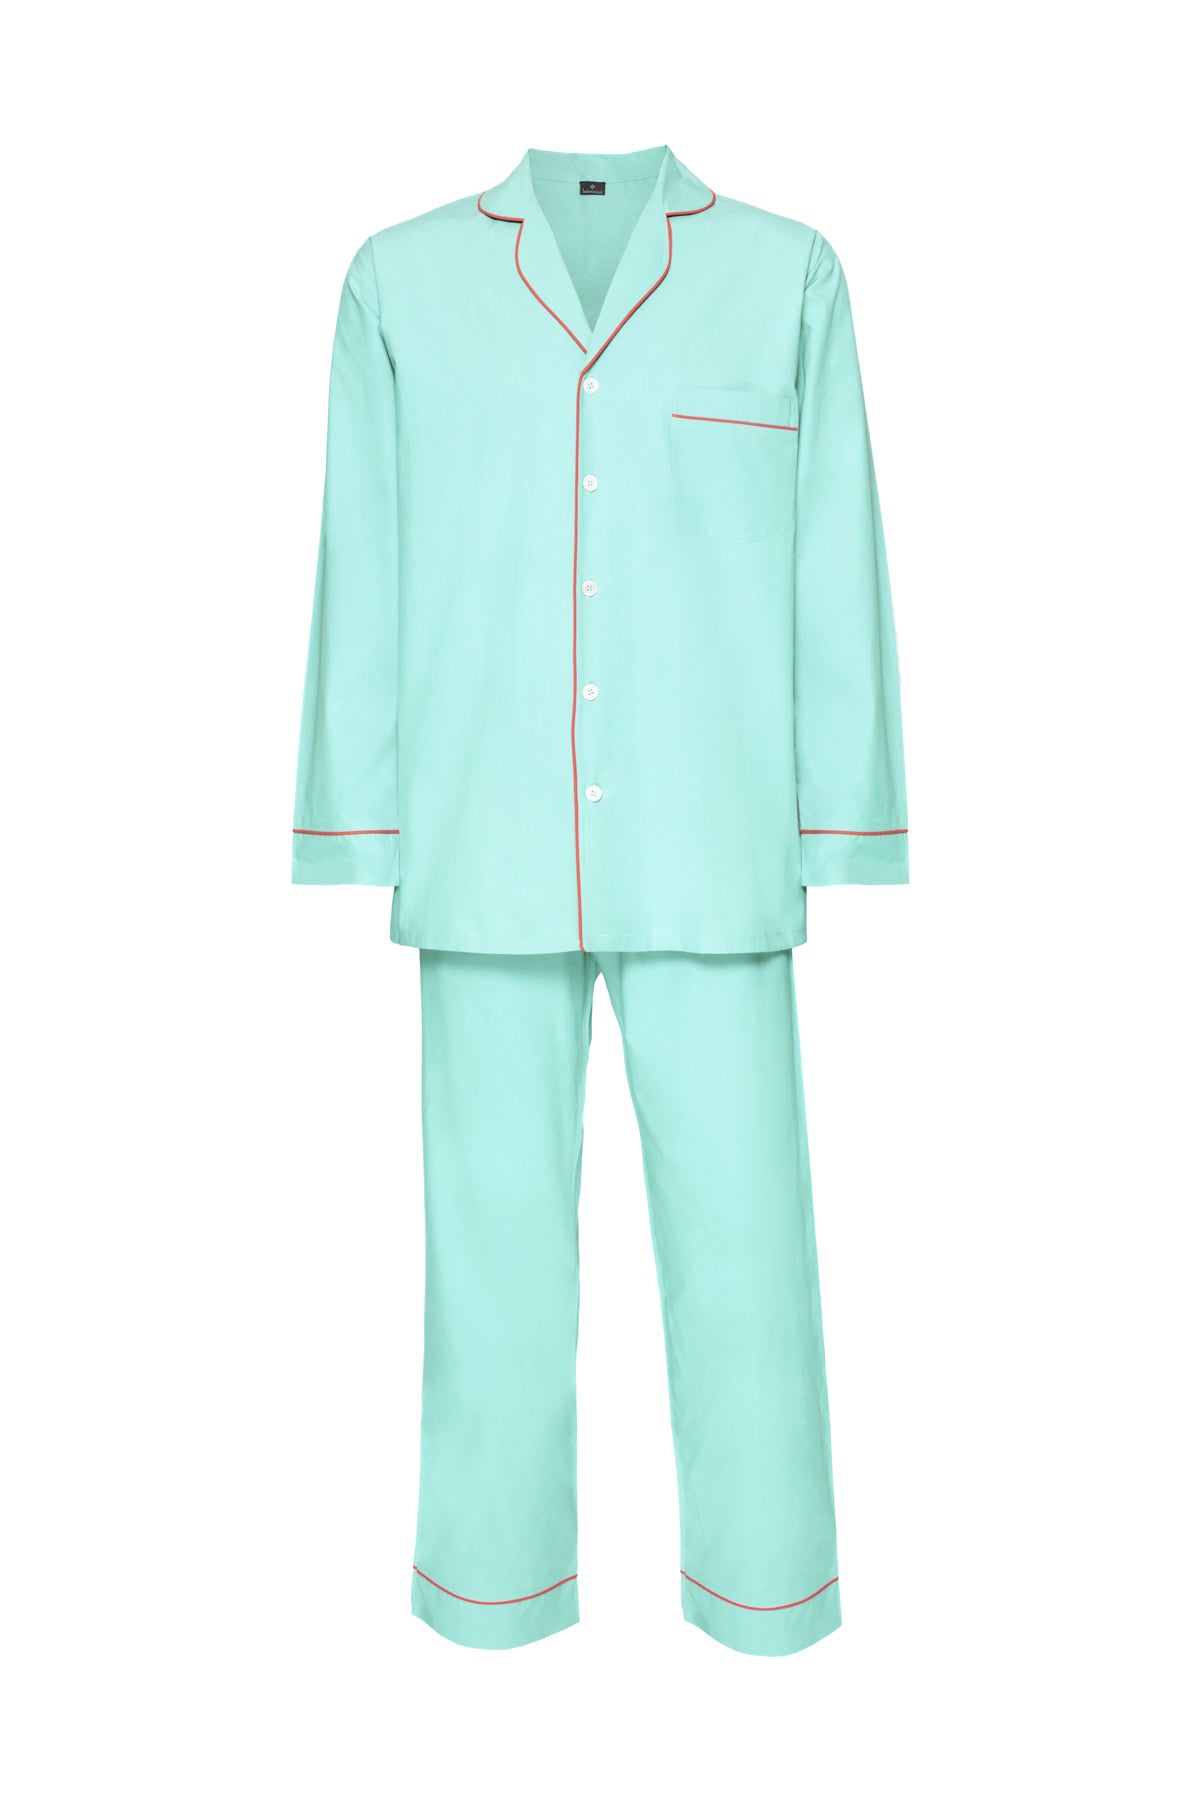 DOBREVA Women's Cotton Pajamas Sets Soft Comfy Lounge Sets Loungewear Pj  Set Button Up Long Sleeve 2 Piece Green Tie Dye X-Small at  Women's  Clothing store